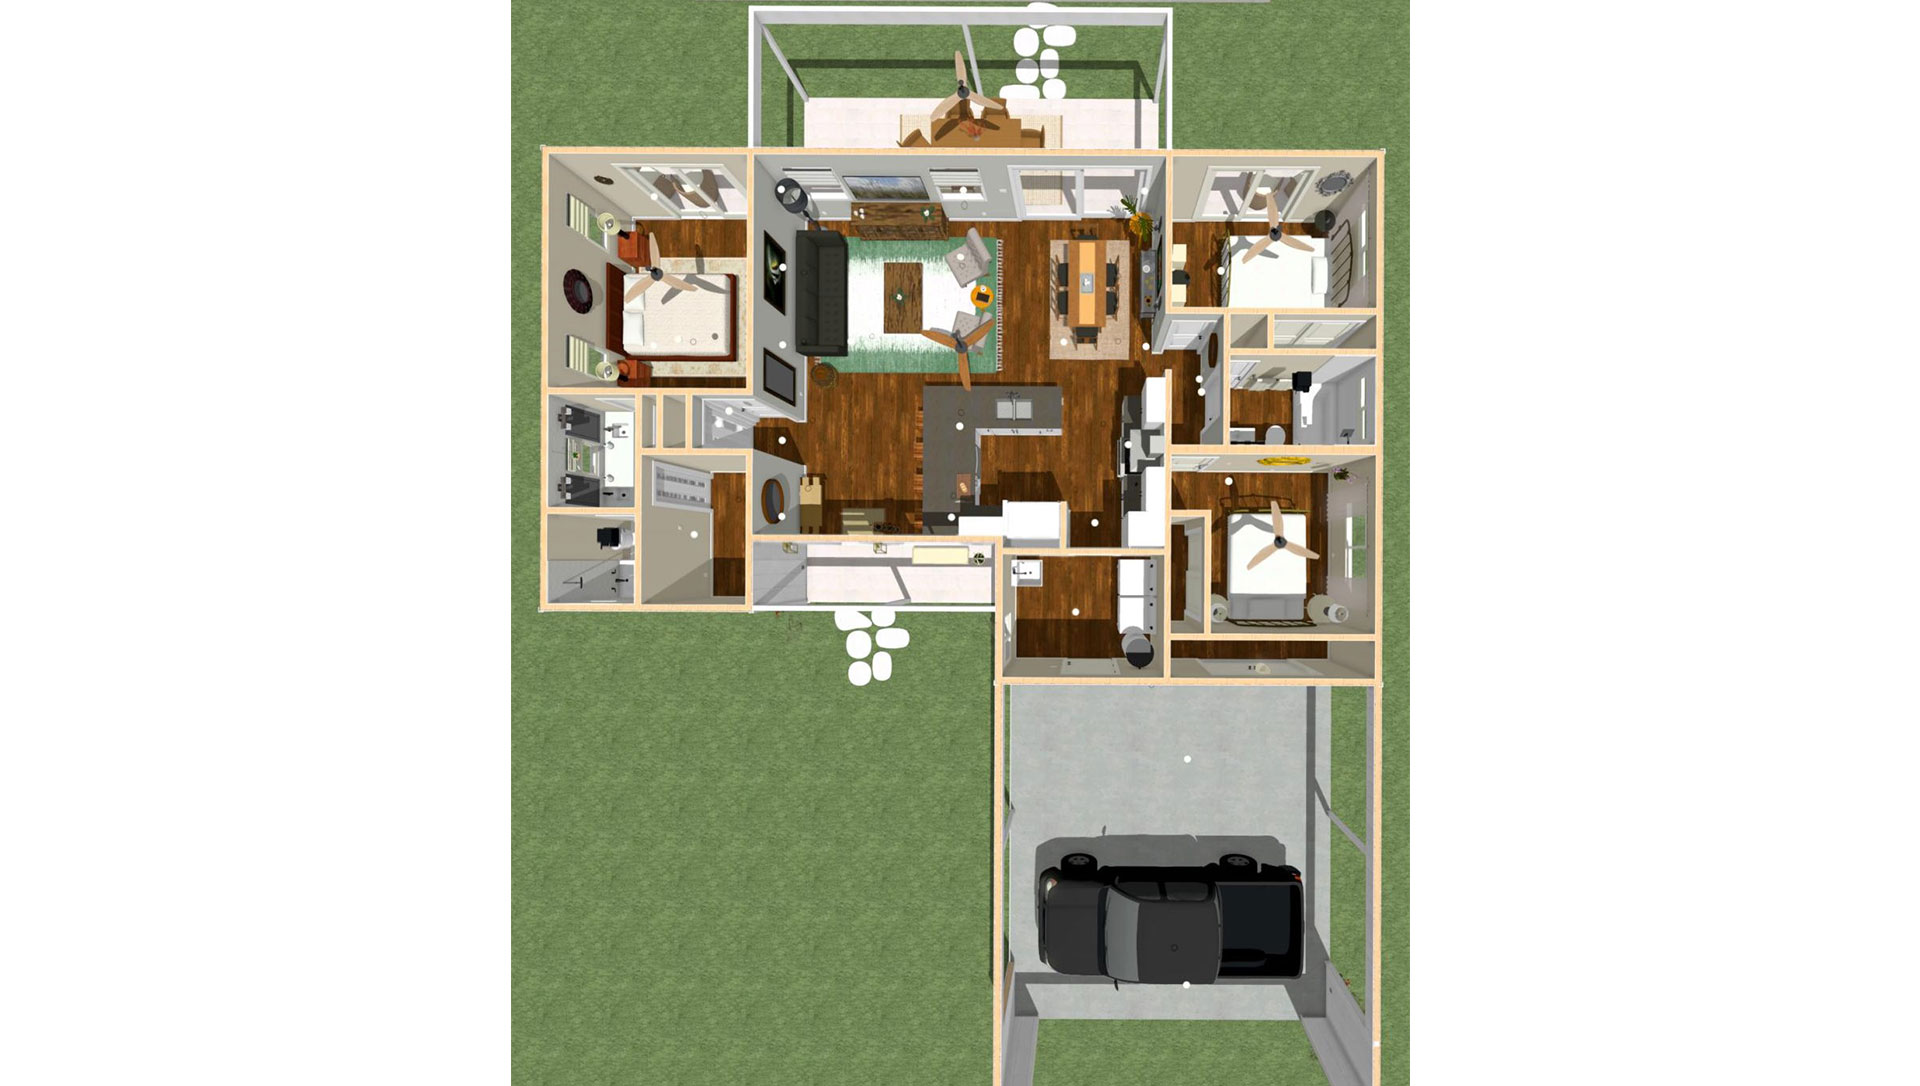 Floor plan view of house